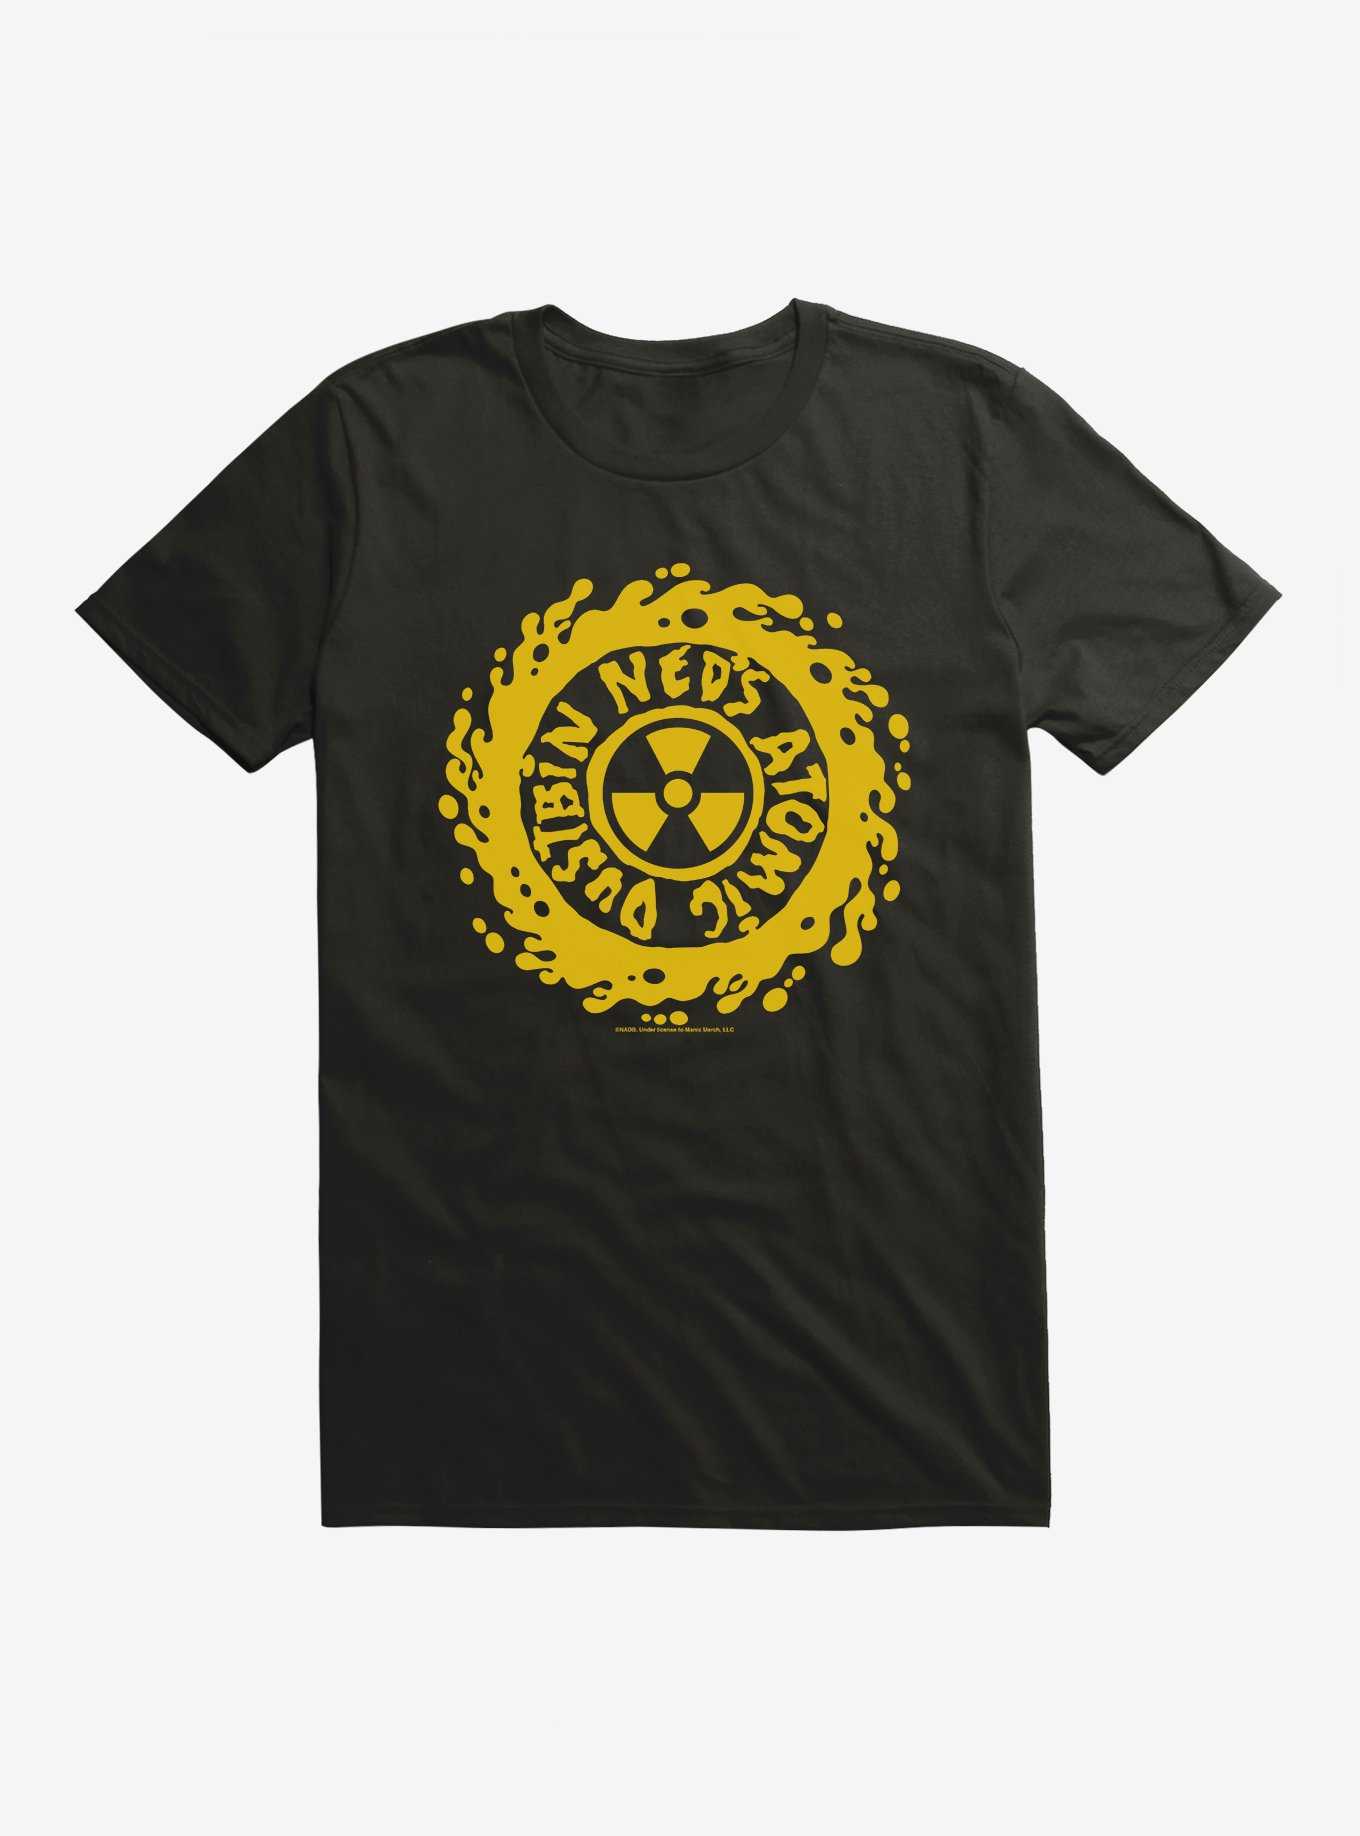 Ned's Atomic Dustbin Biohazard Logo T-Shirt, , hi-res